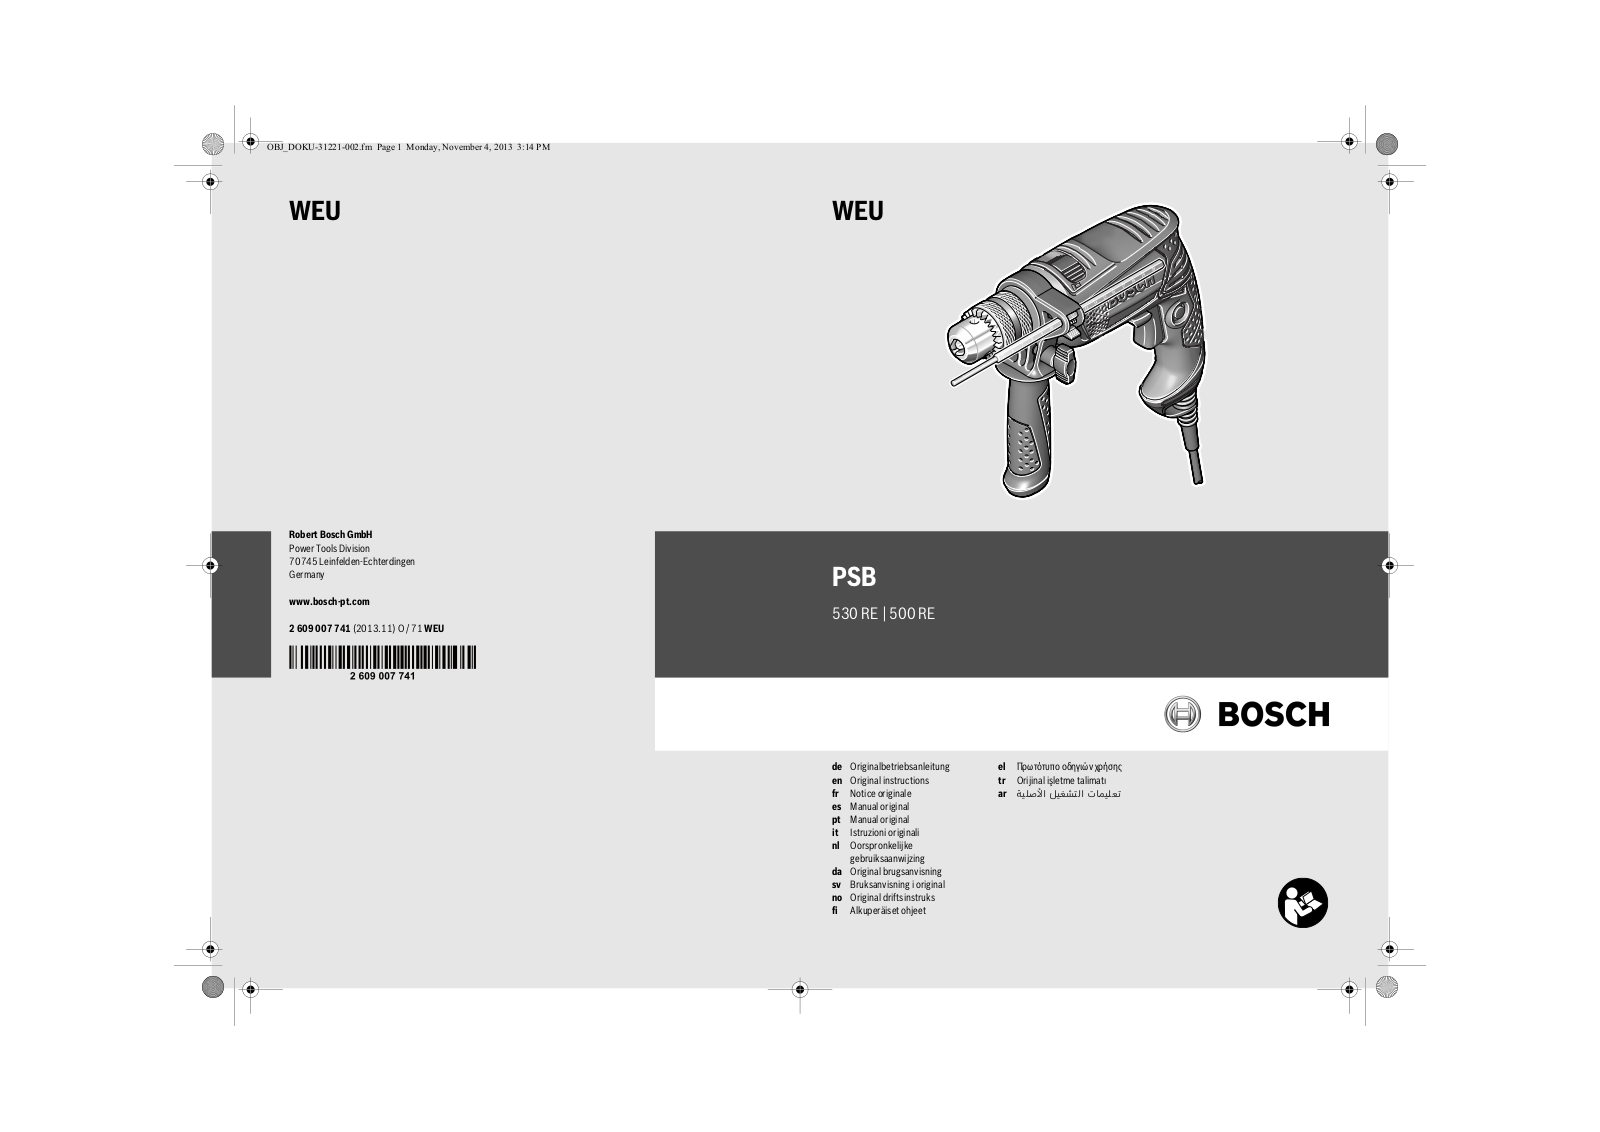 Bosch PSB 530 RE User Manual